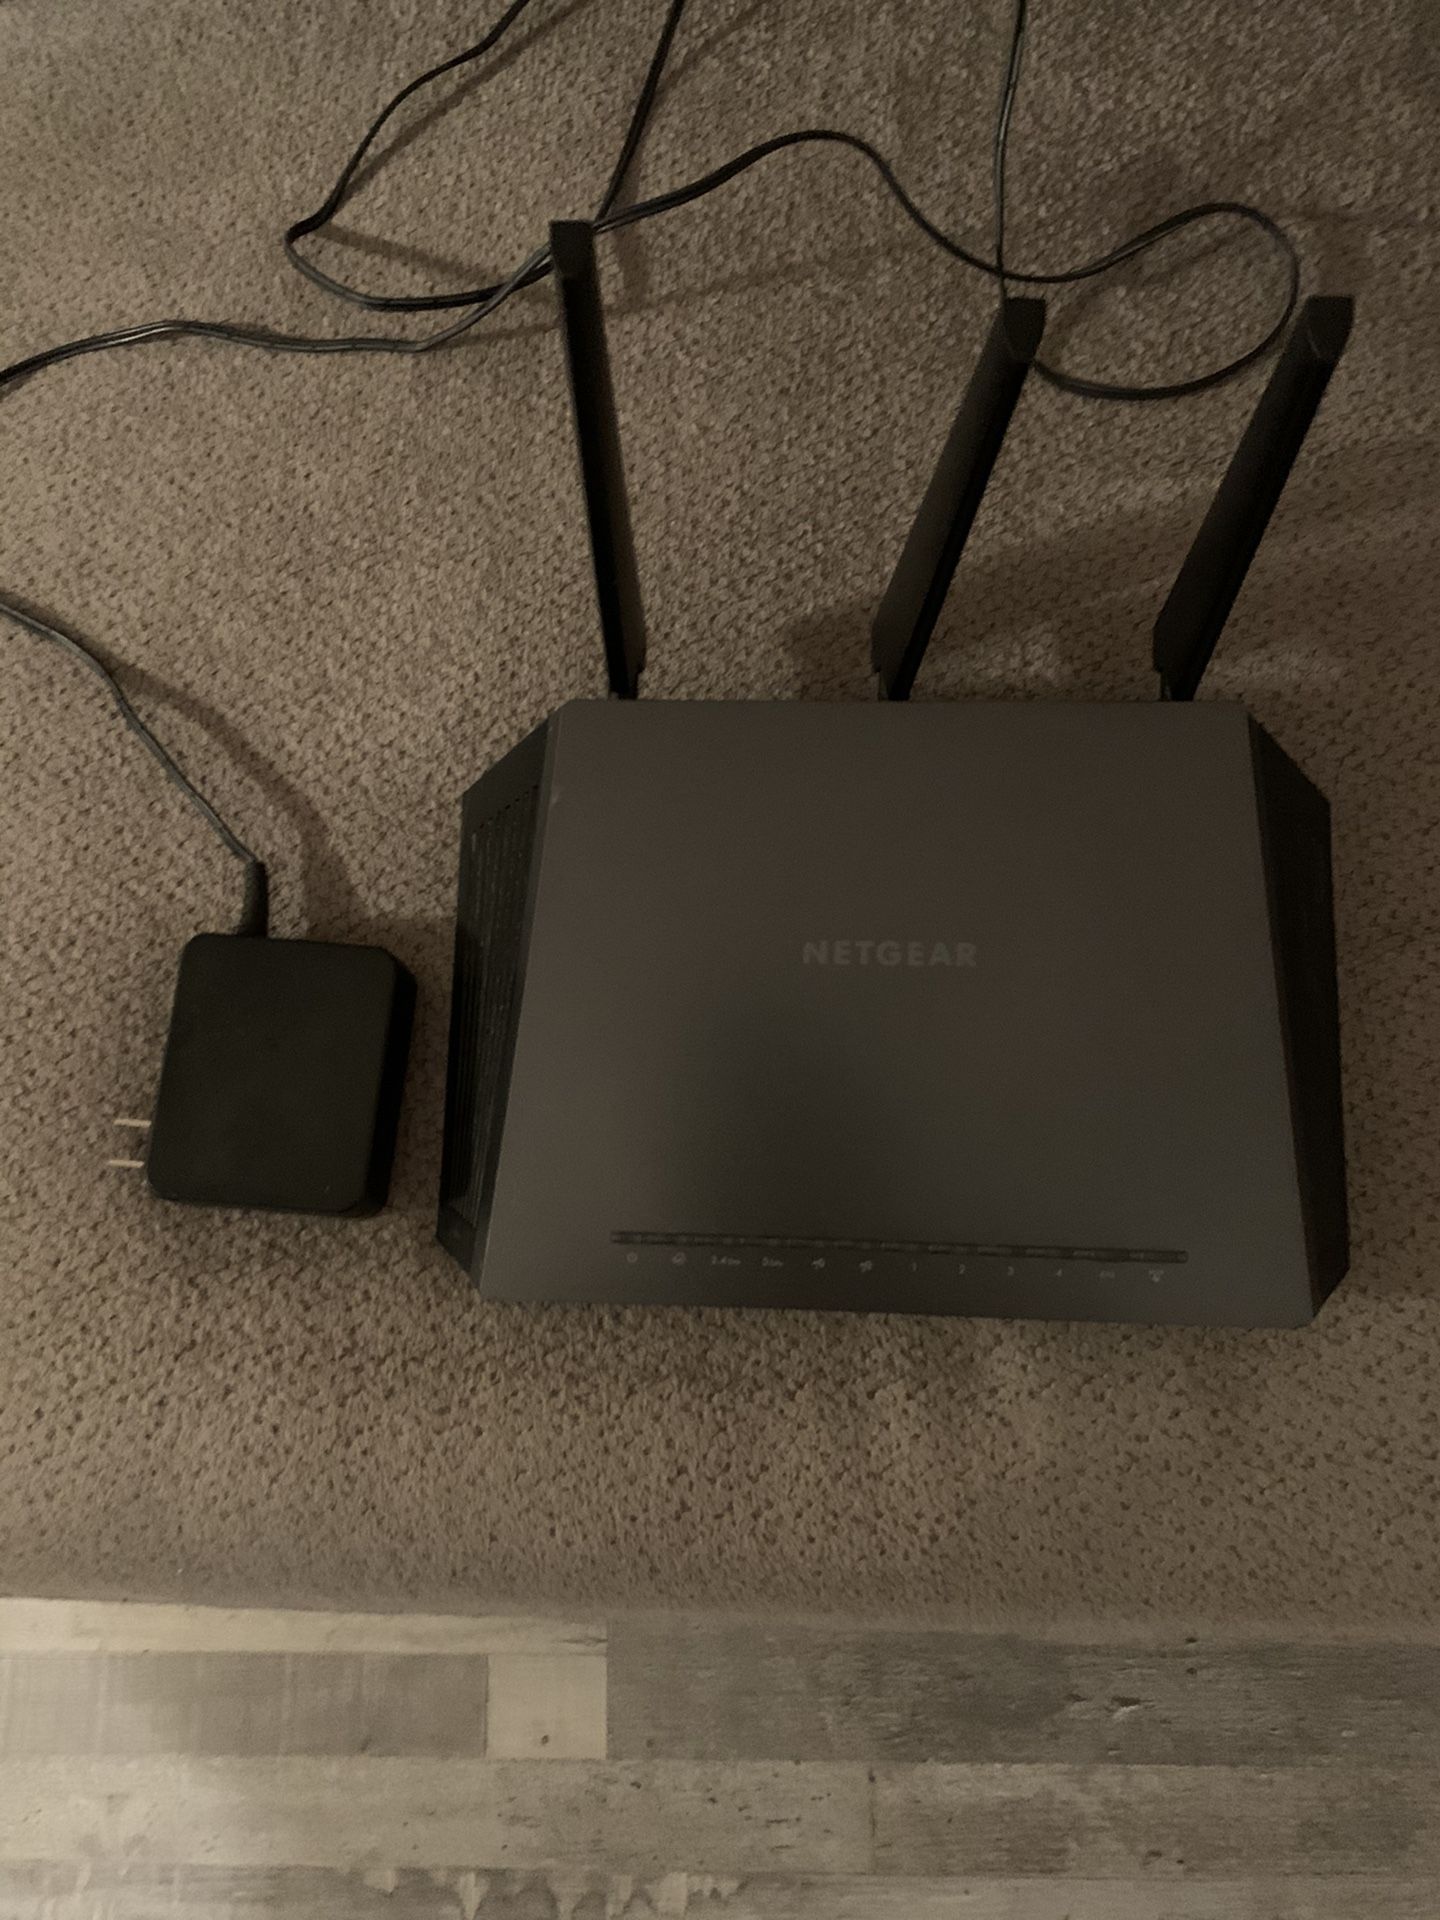 Netgear Nighthawk Smart WiFi Gaming Router